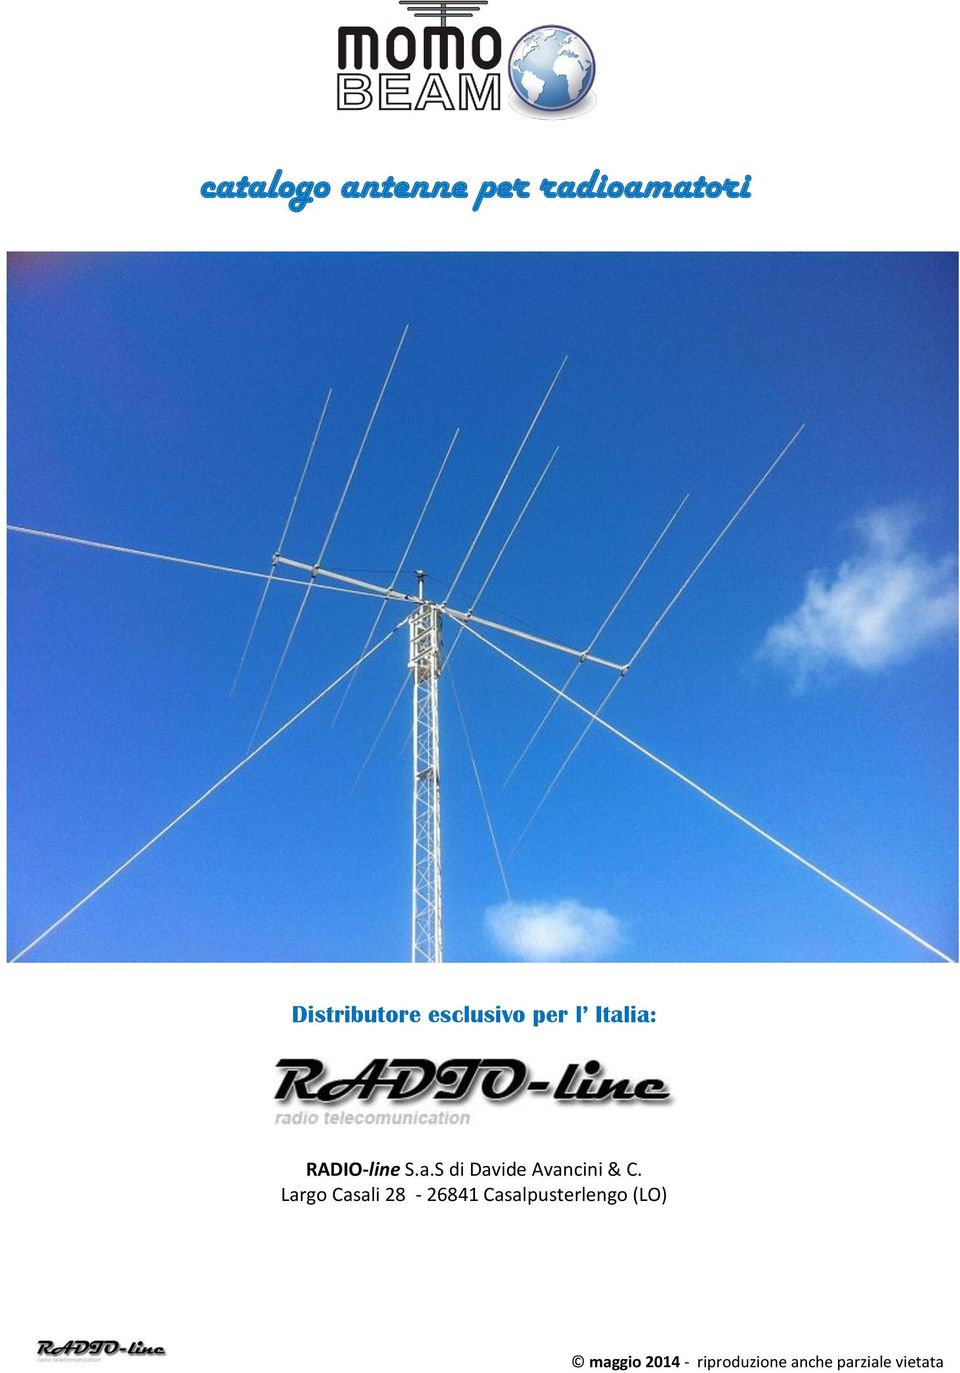 RADIO-line S.a.